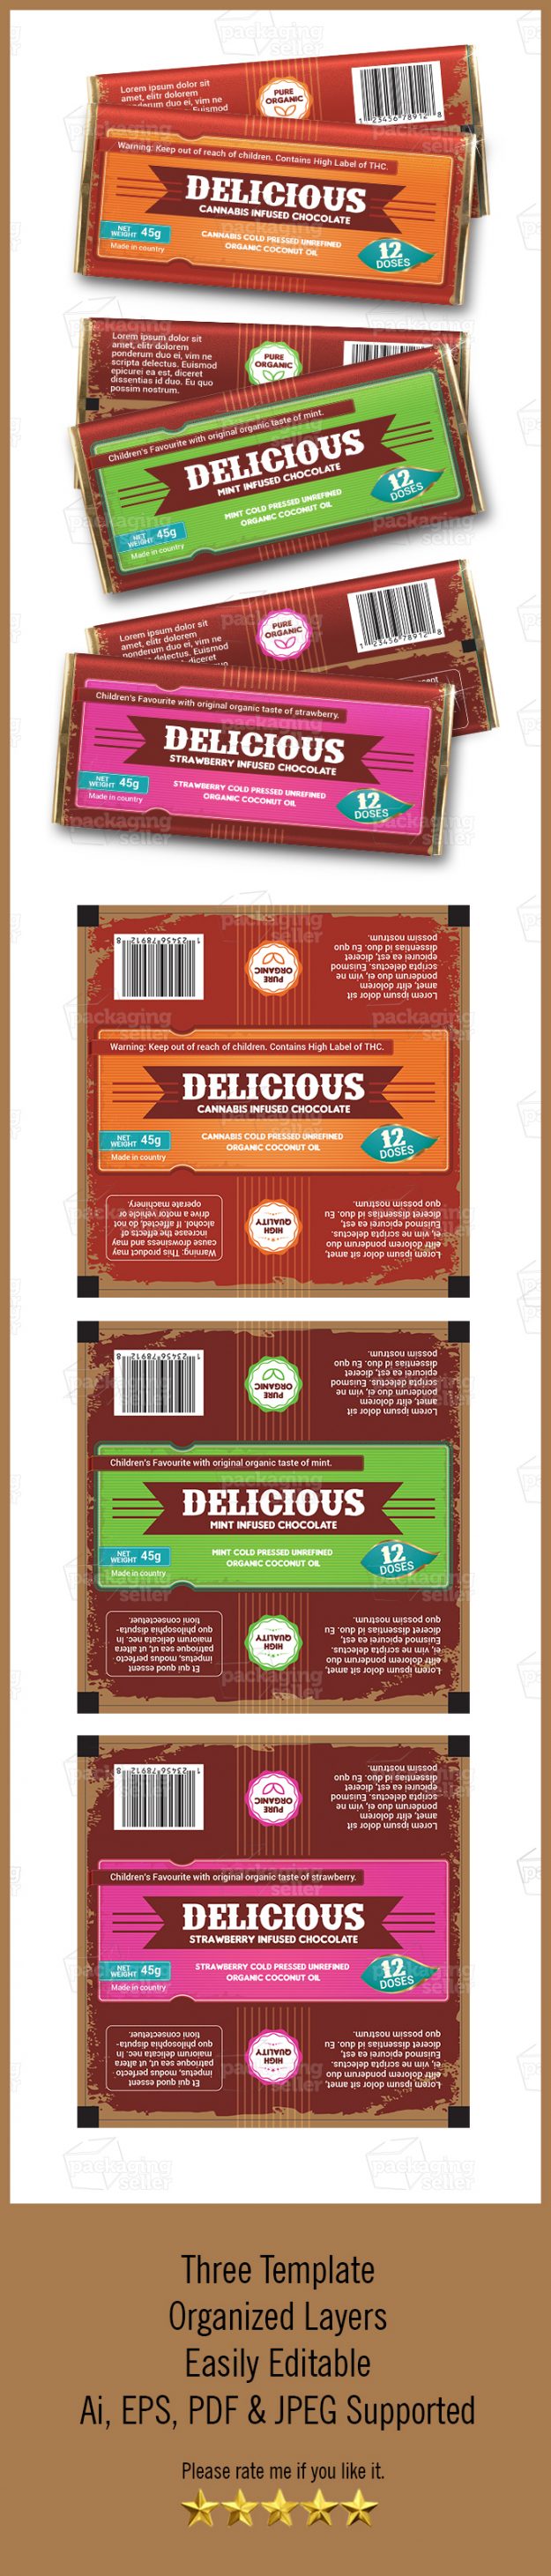 Chocolate bar Packaging Template Design